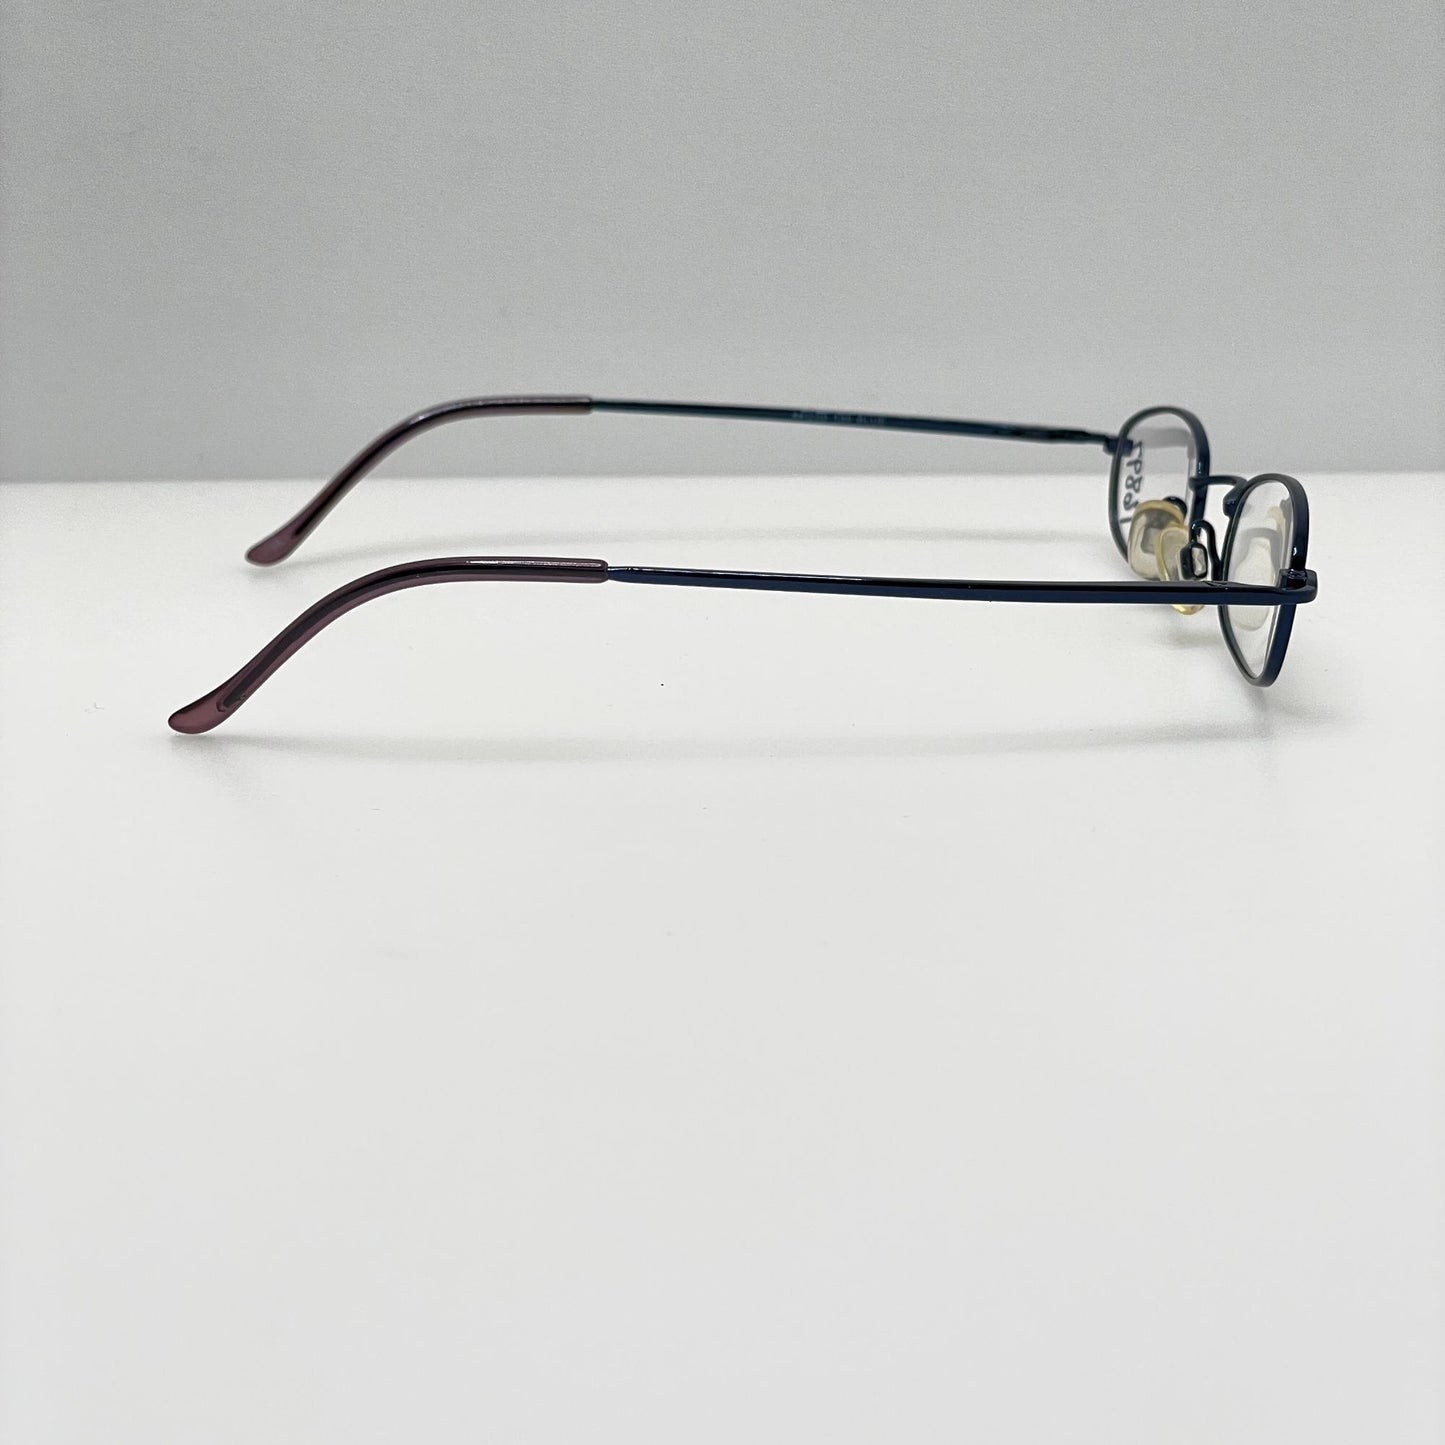 Modern Eyeglasses Eye Glasses Frames Soda Blue 44-20-130 Kids Youth